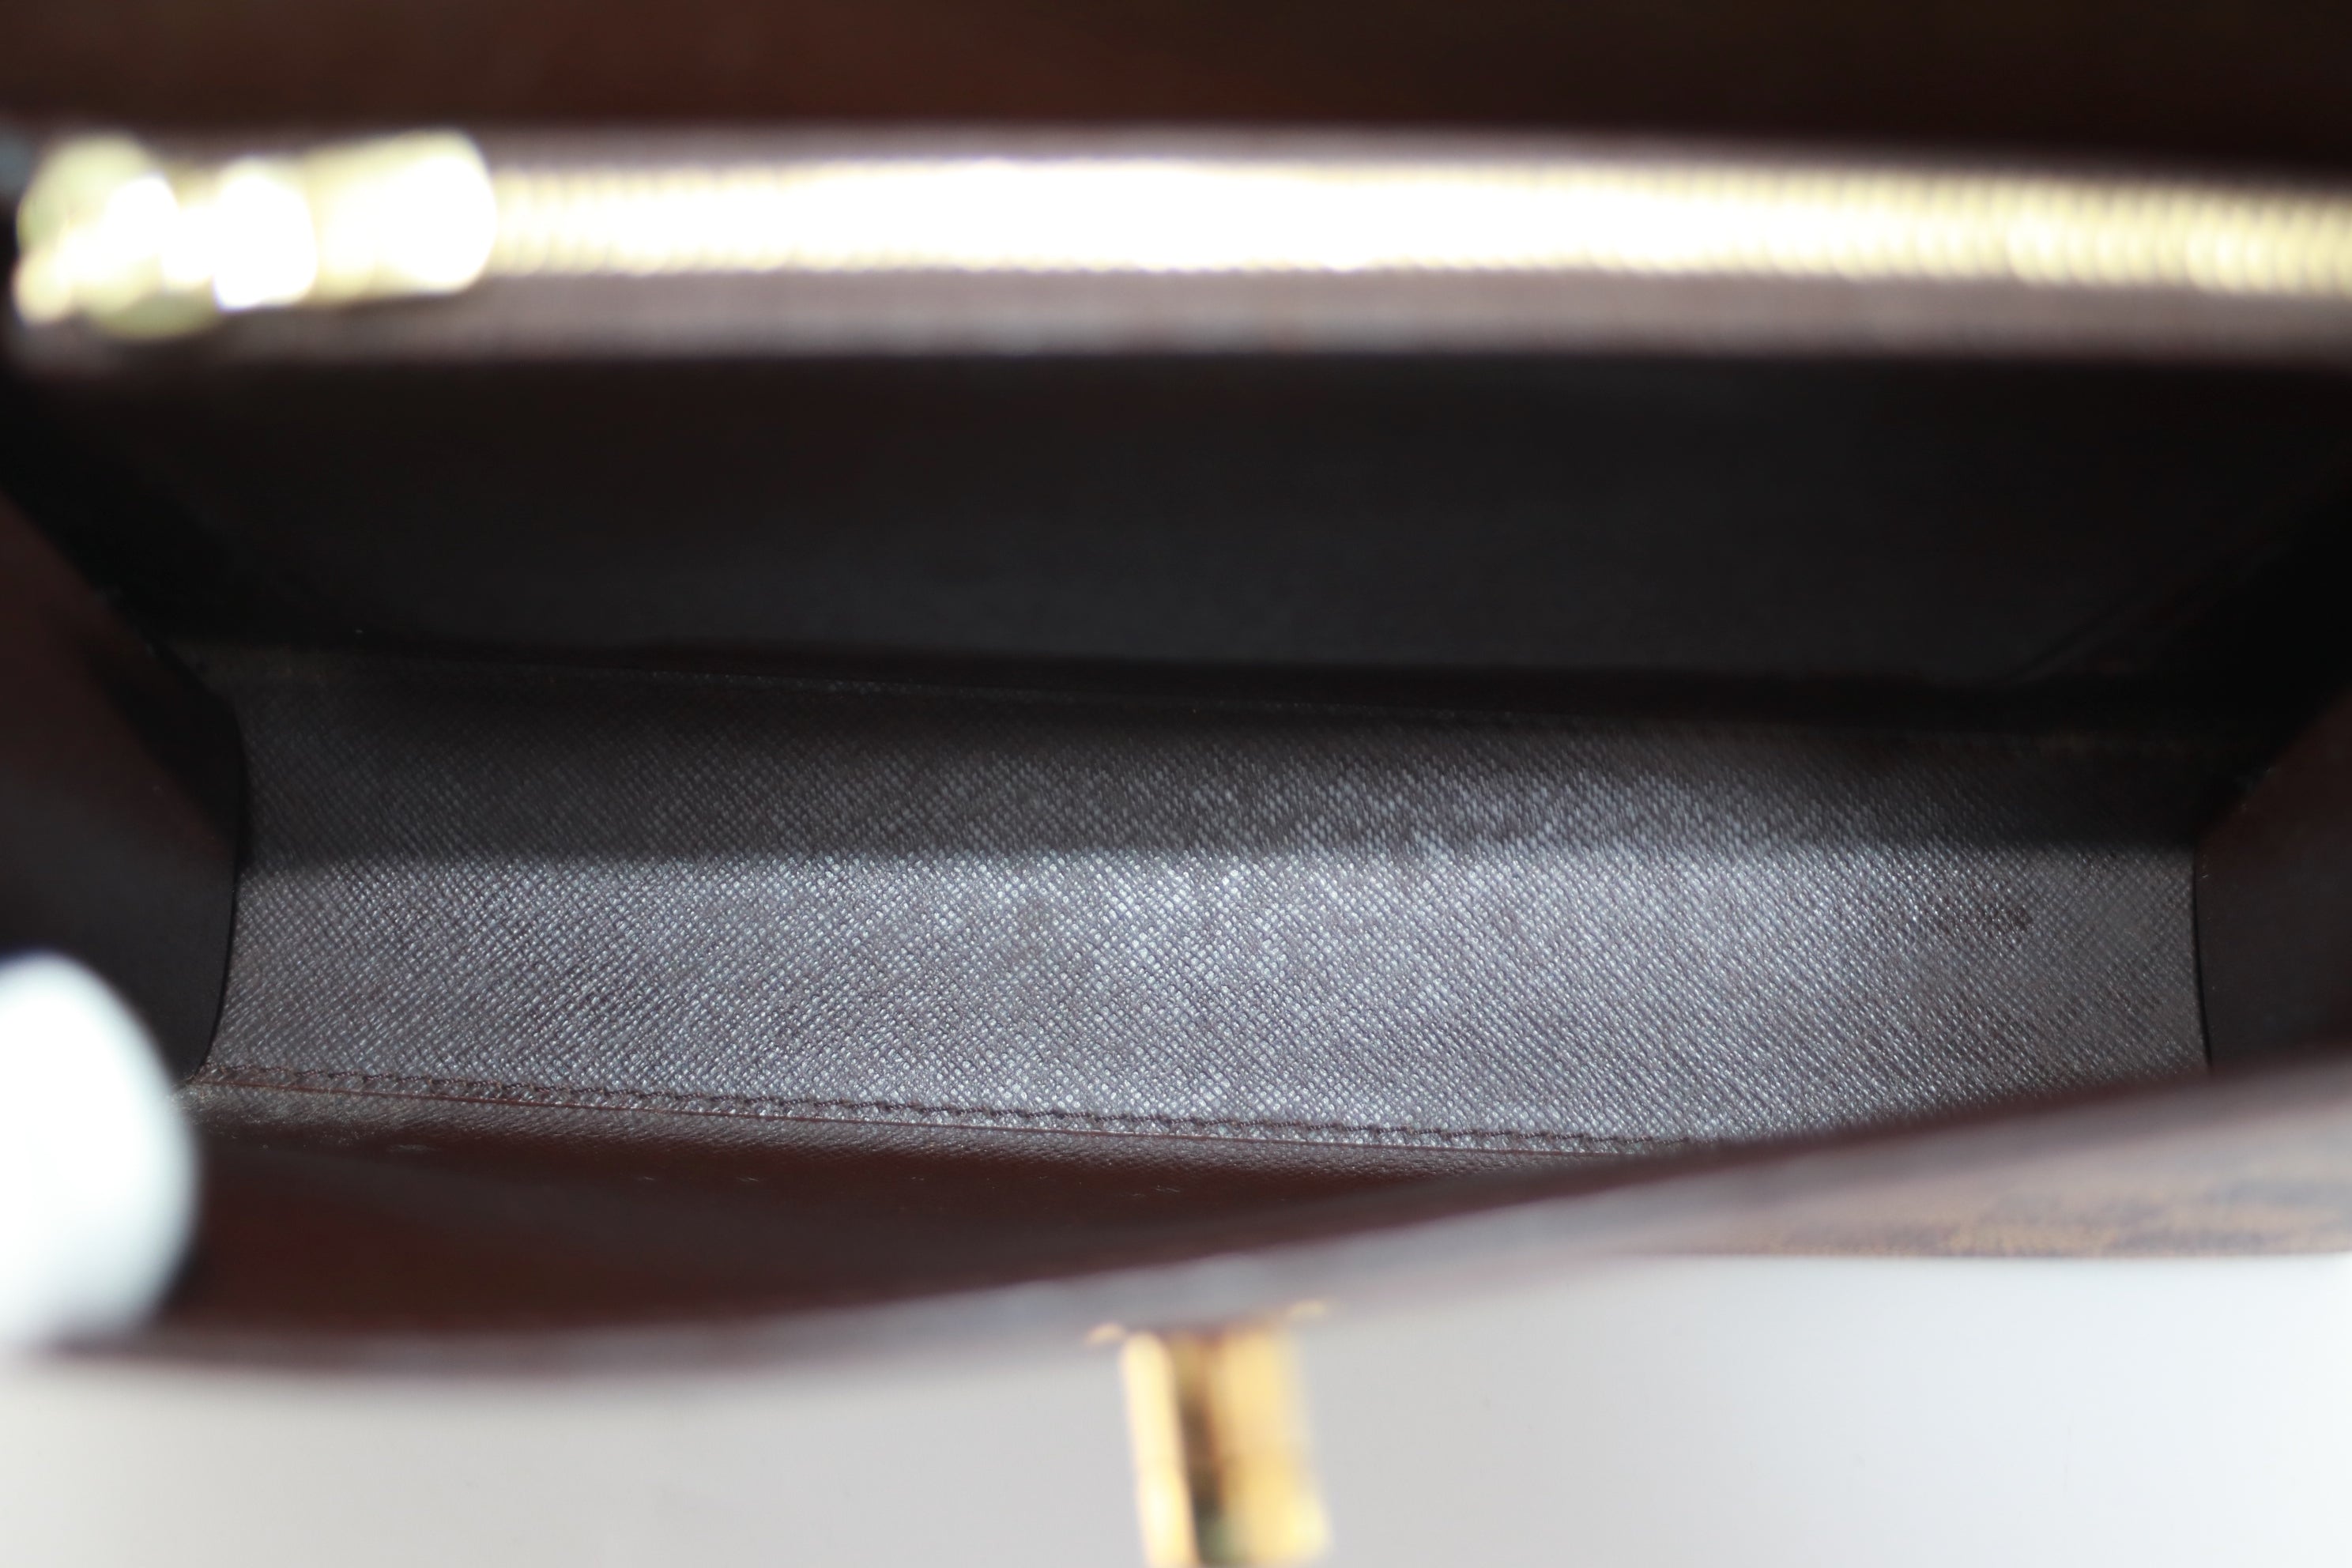 Louis Vuitton Malesherbes Damier Ebene Handbag Used (7712)